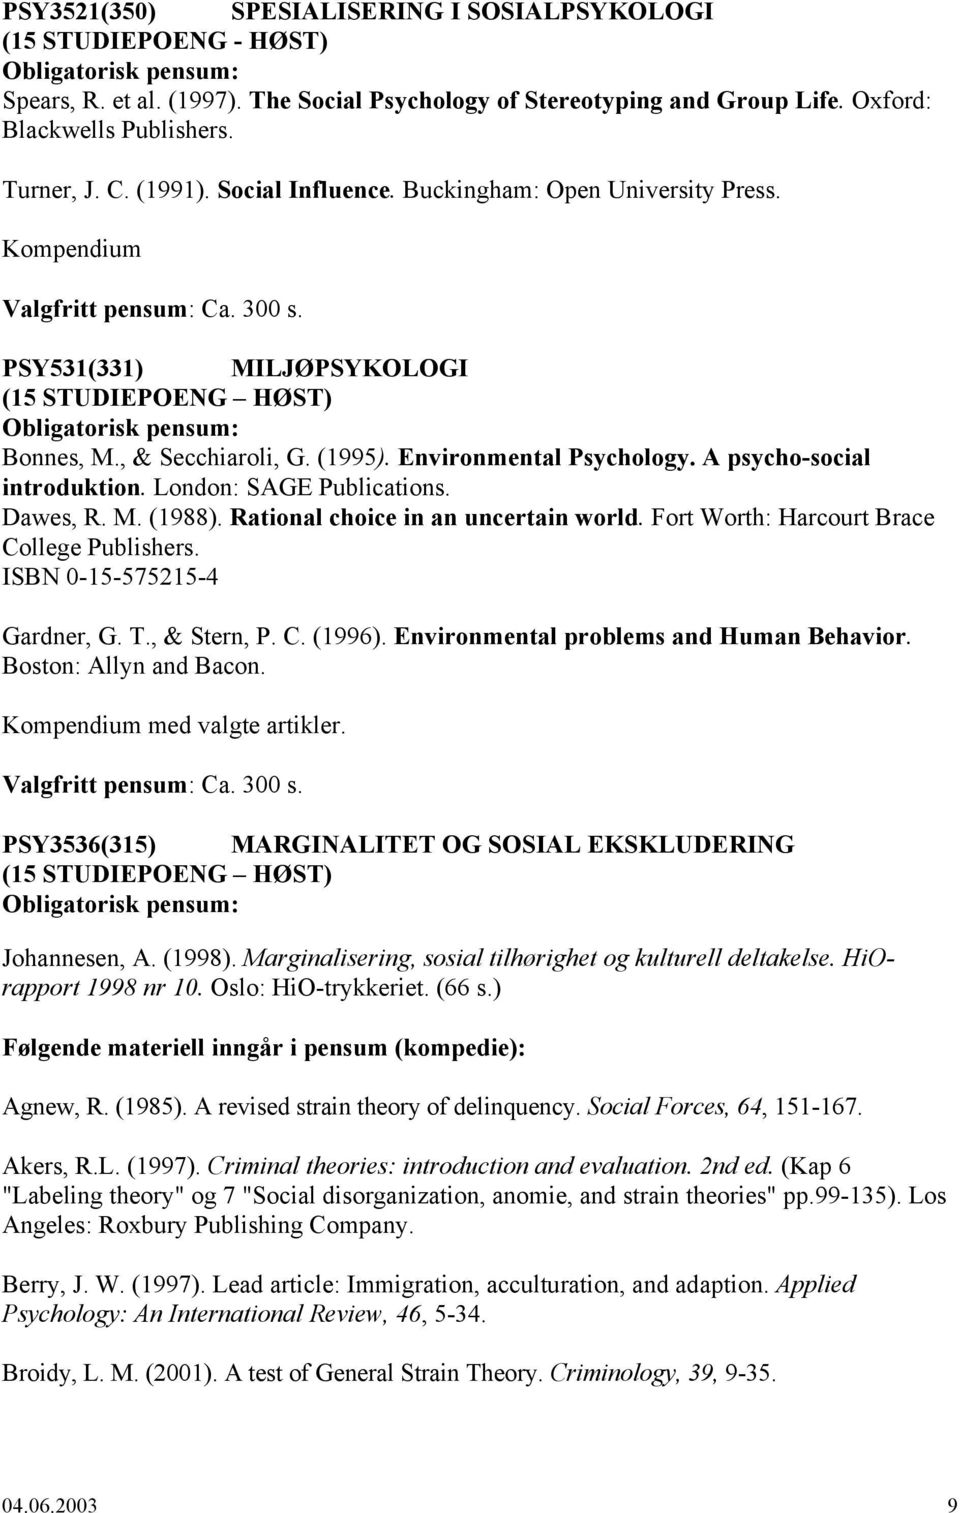 PSY531(331) MILJØPSYKOLOGI Obligatorisk pensum: Bonnes, M., & Secchiaroli, G. (1995). Environmental Psychology. A psycho-social introduktion. London: SAGE Publications. Dawes, R. M. (1988).